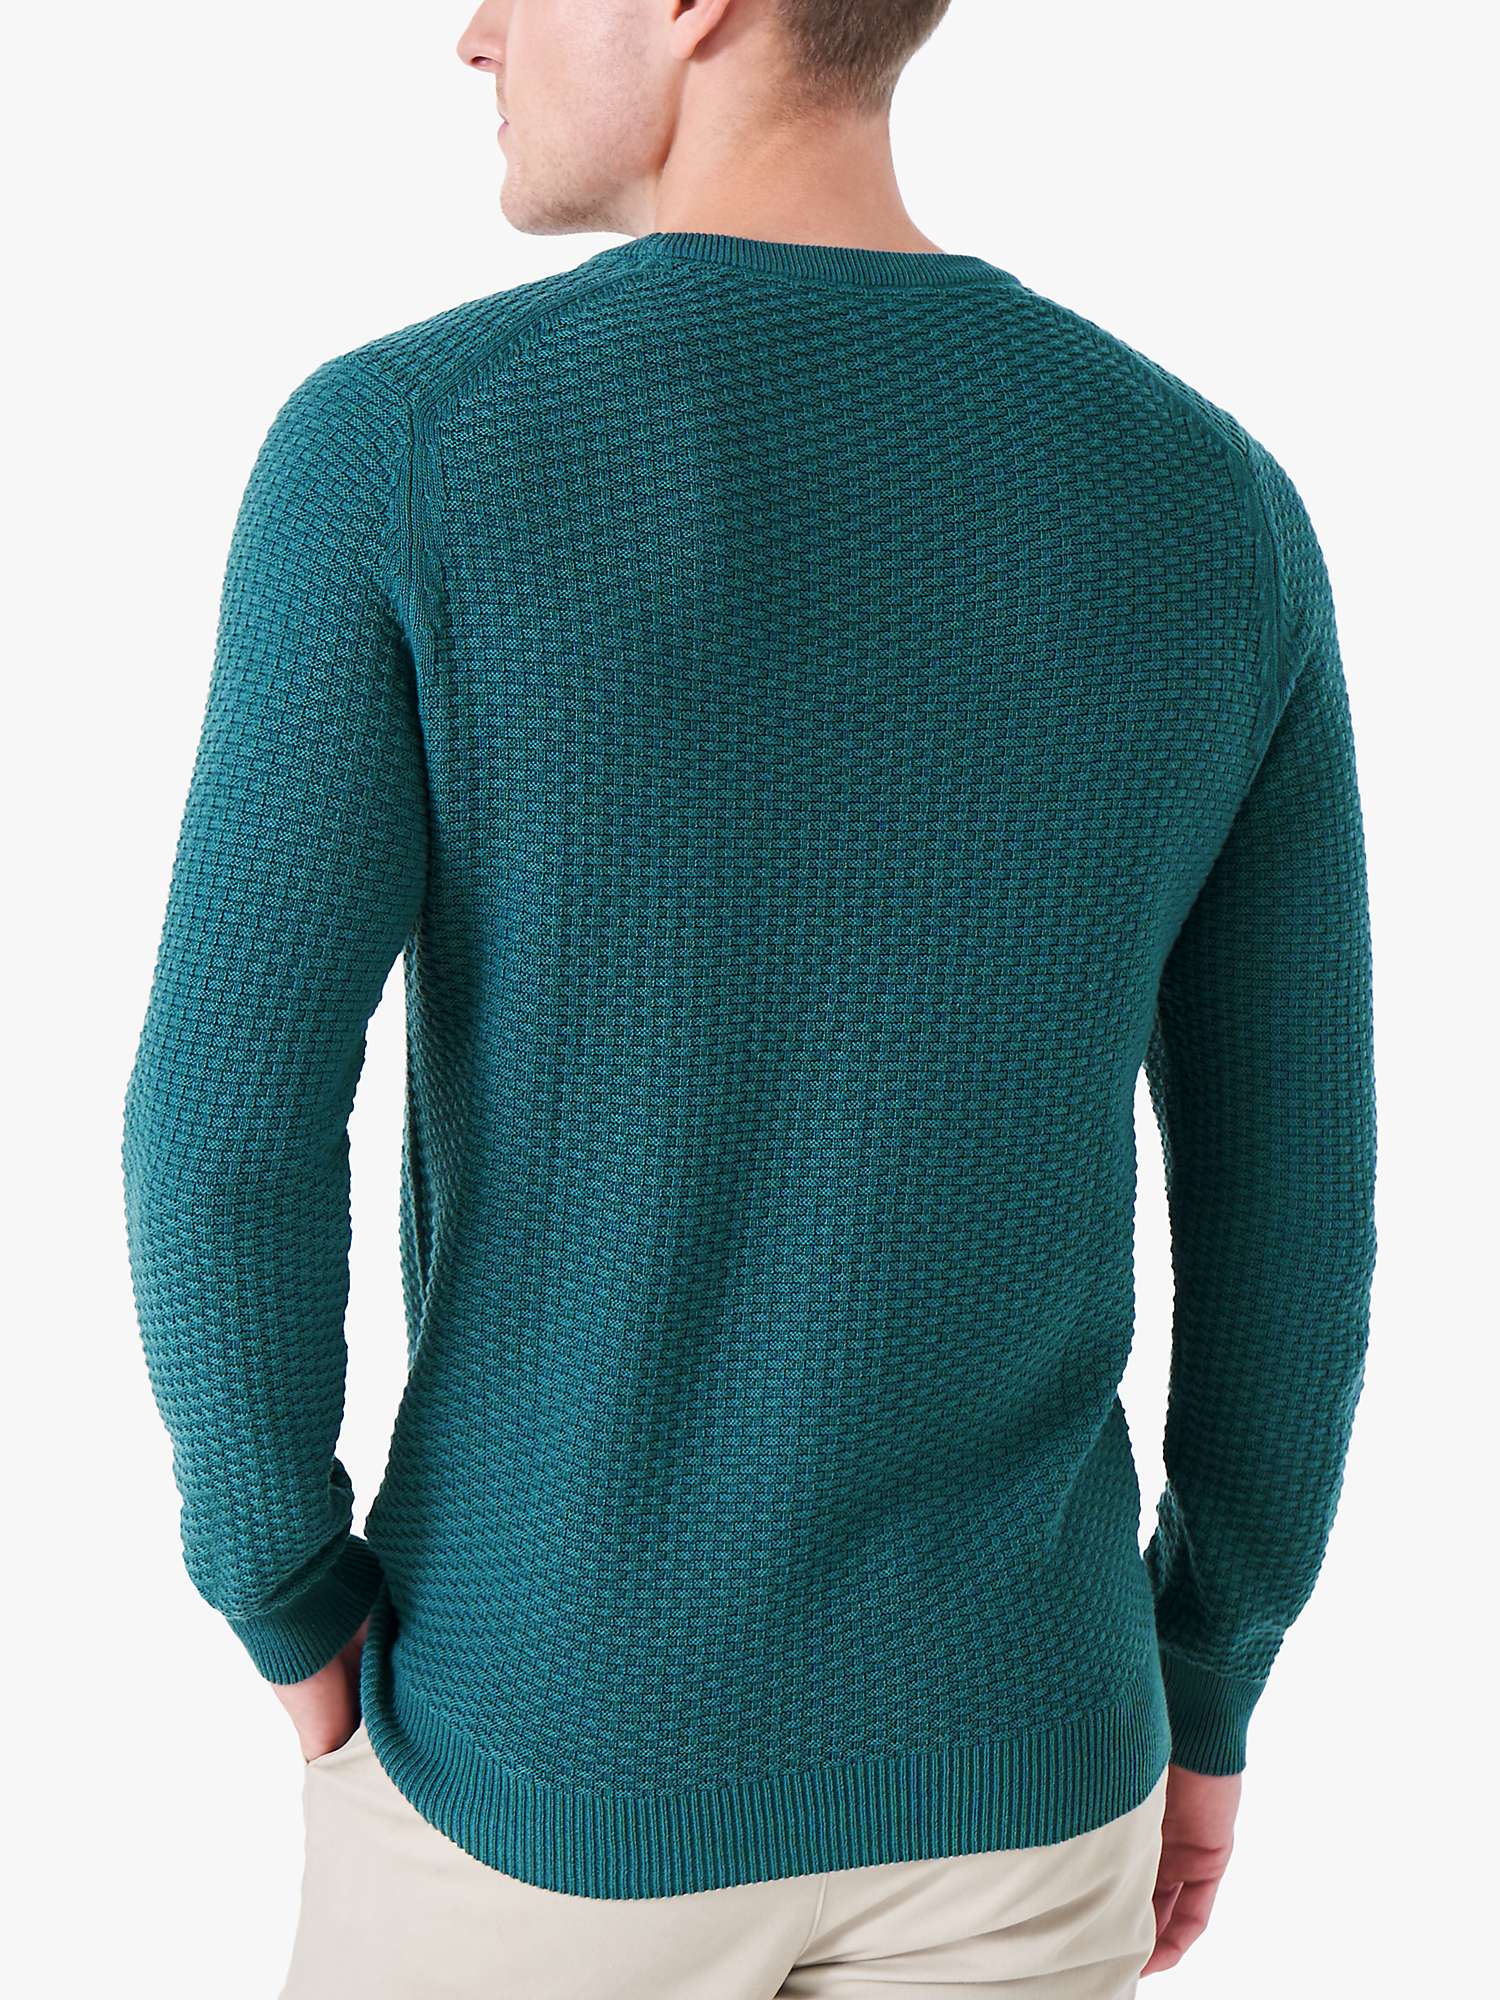 Buy Crew Clothing Breakwater Organic Cotton Knit Jumper Online at johnlewis.com